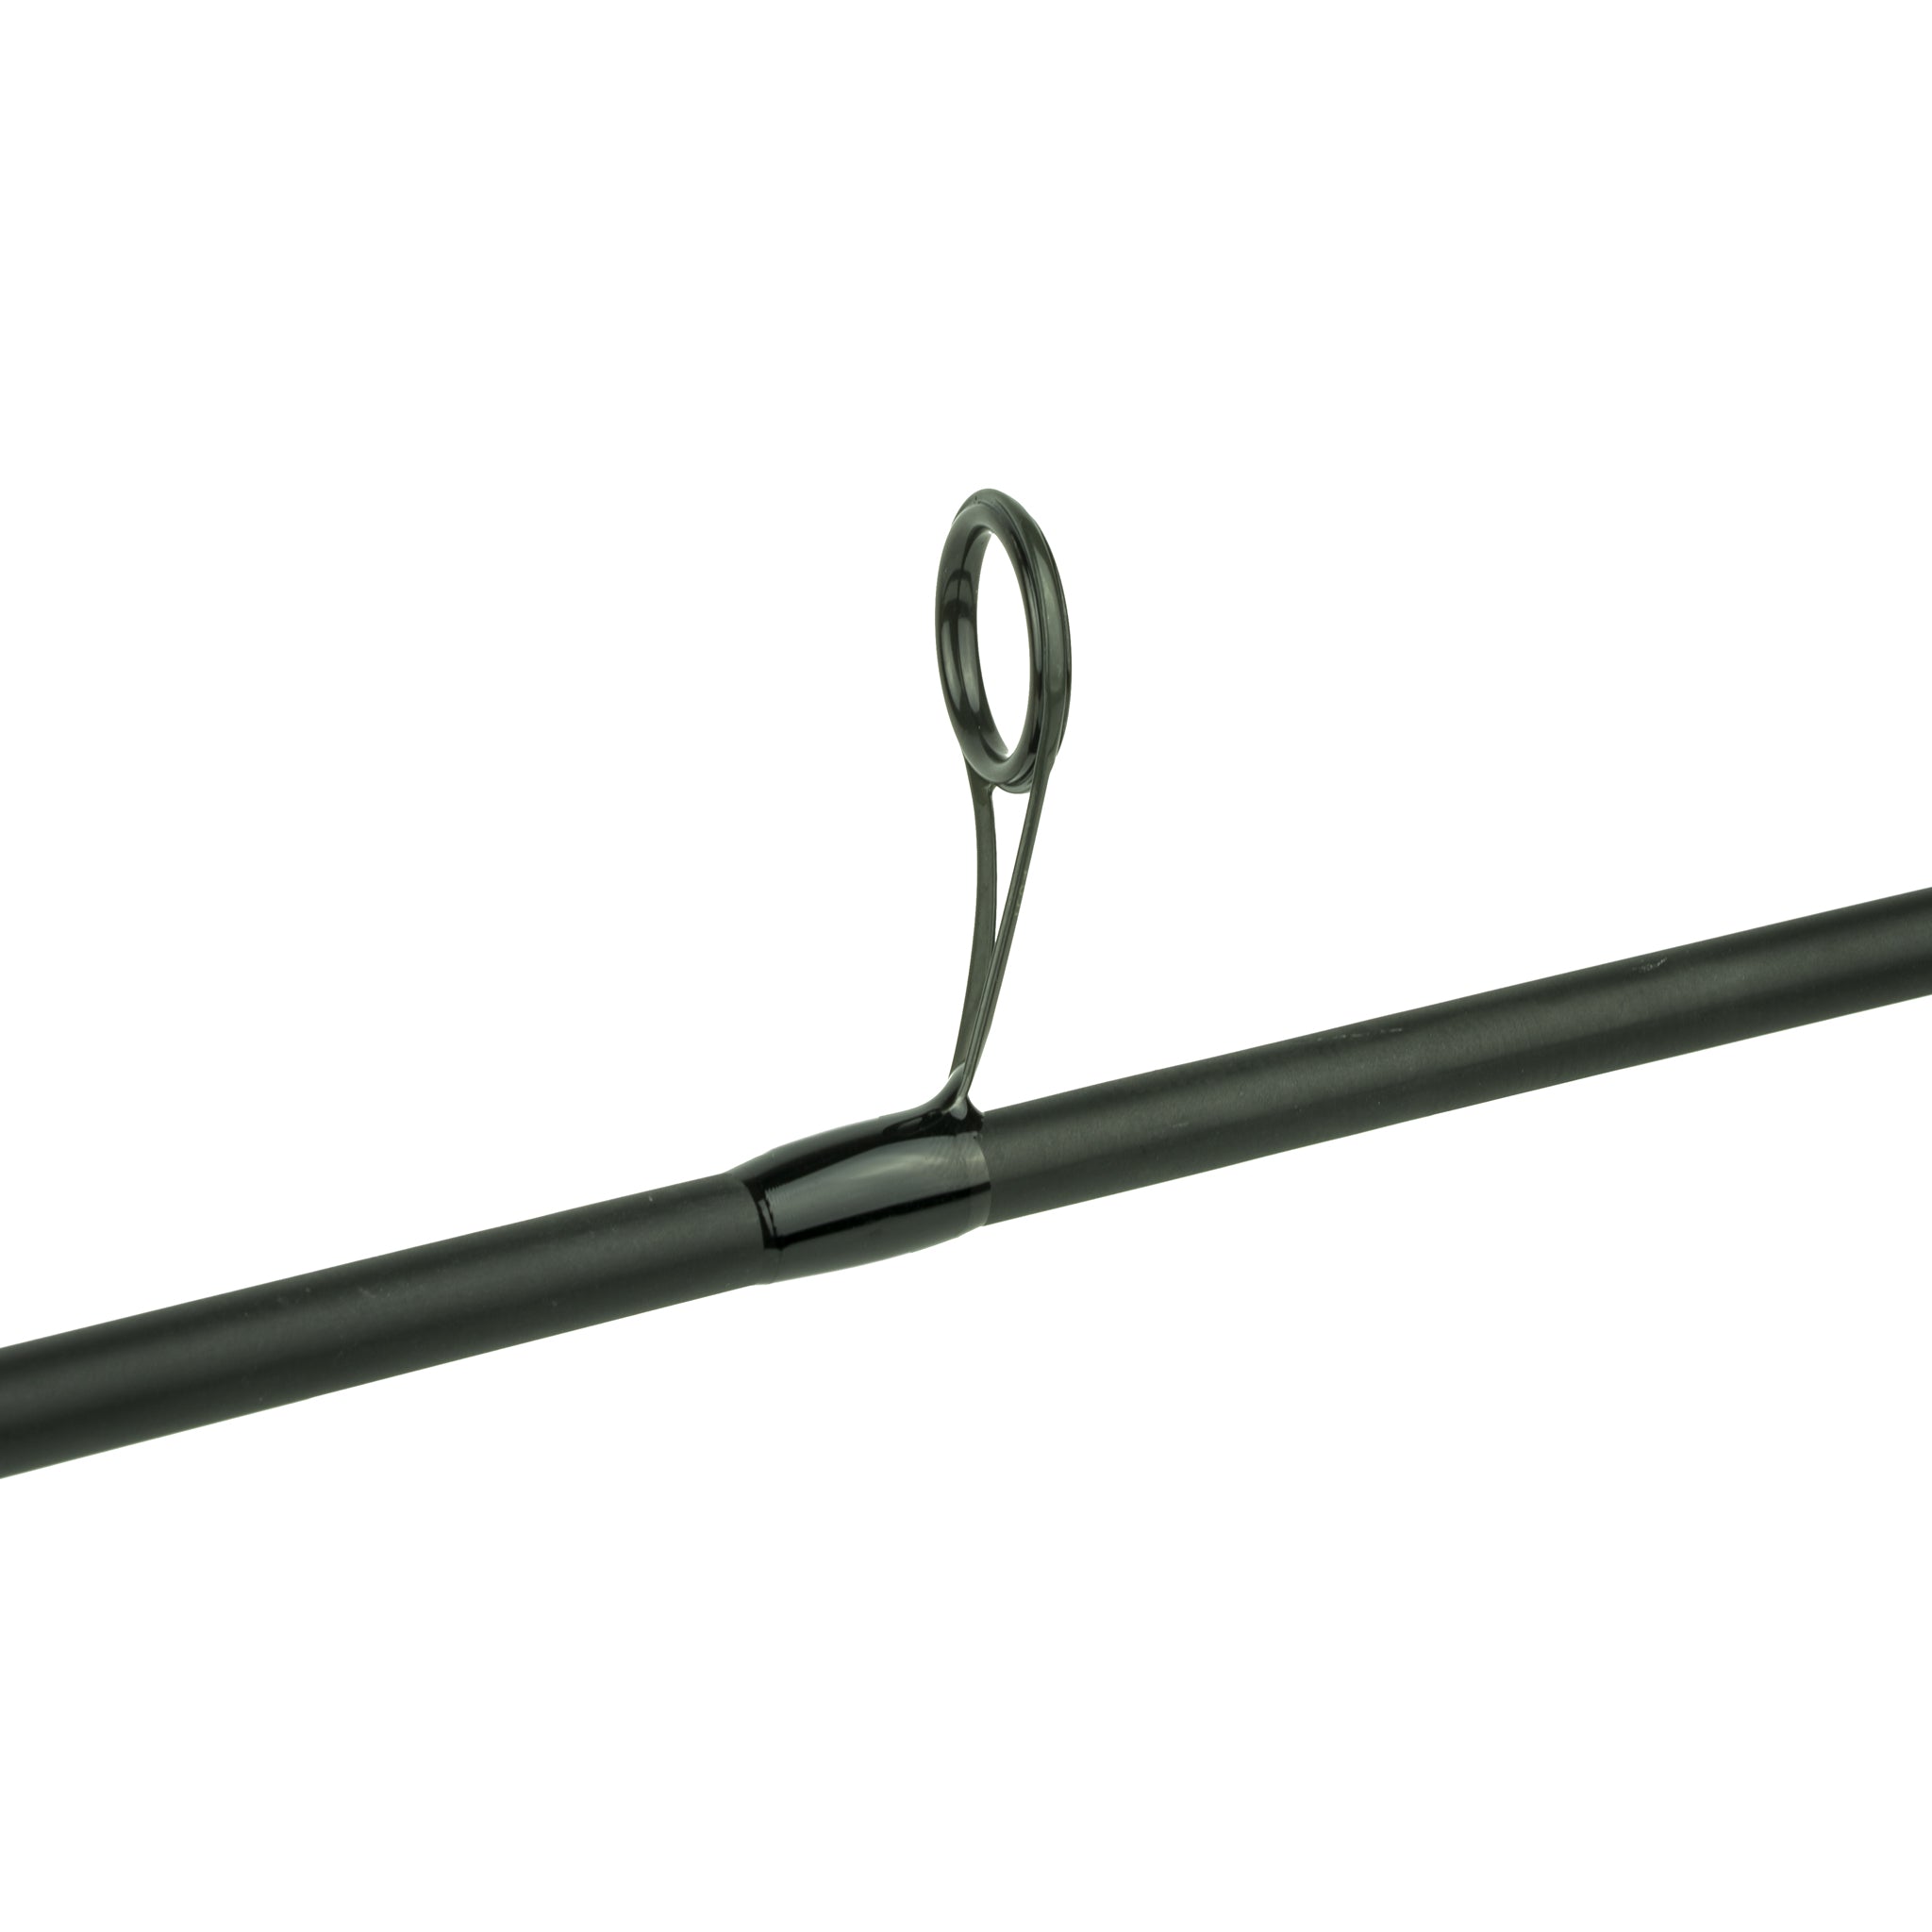 ESP 7'3 Medium-Light, Moderate (Spinning Rod)